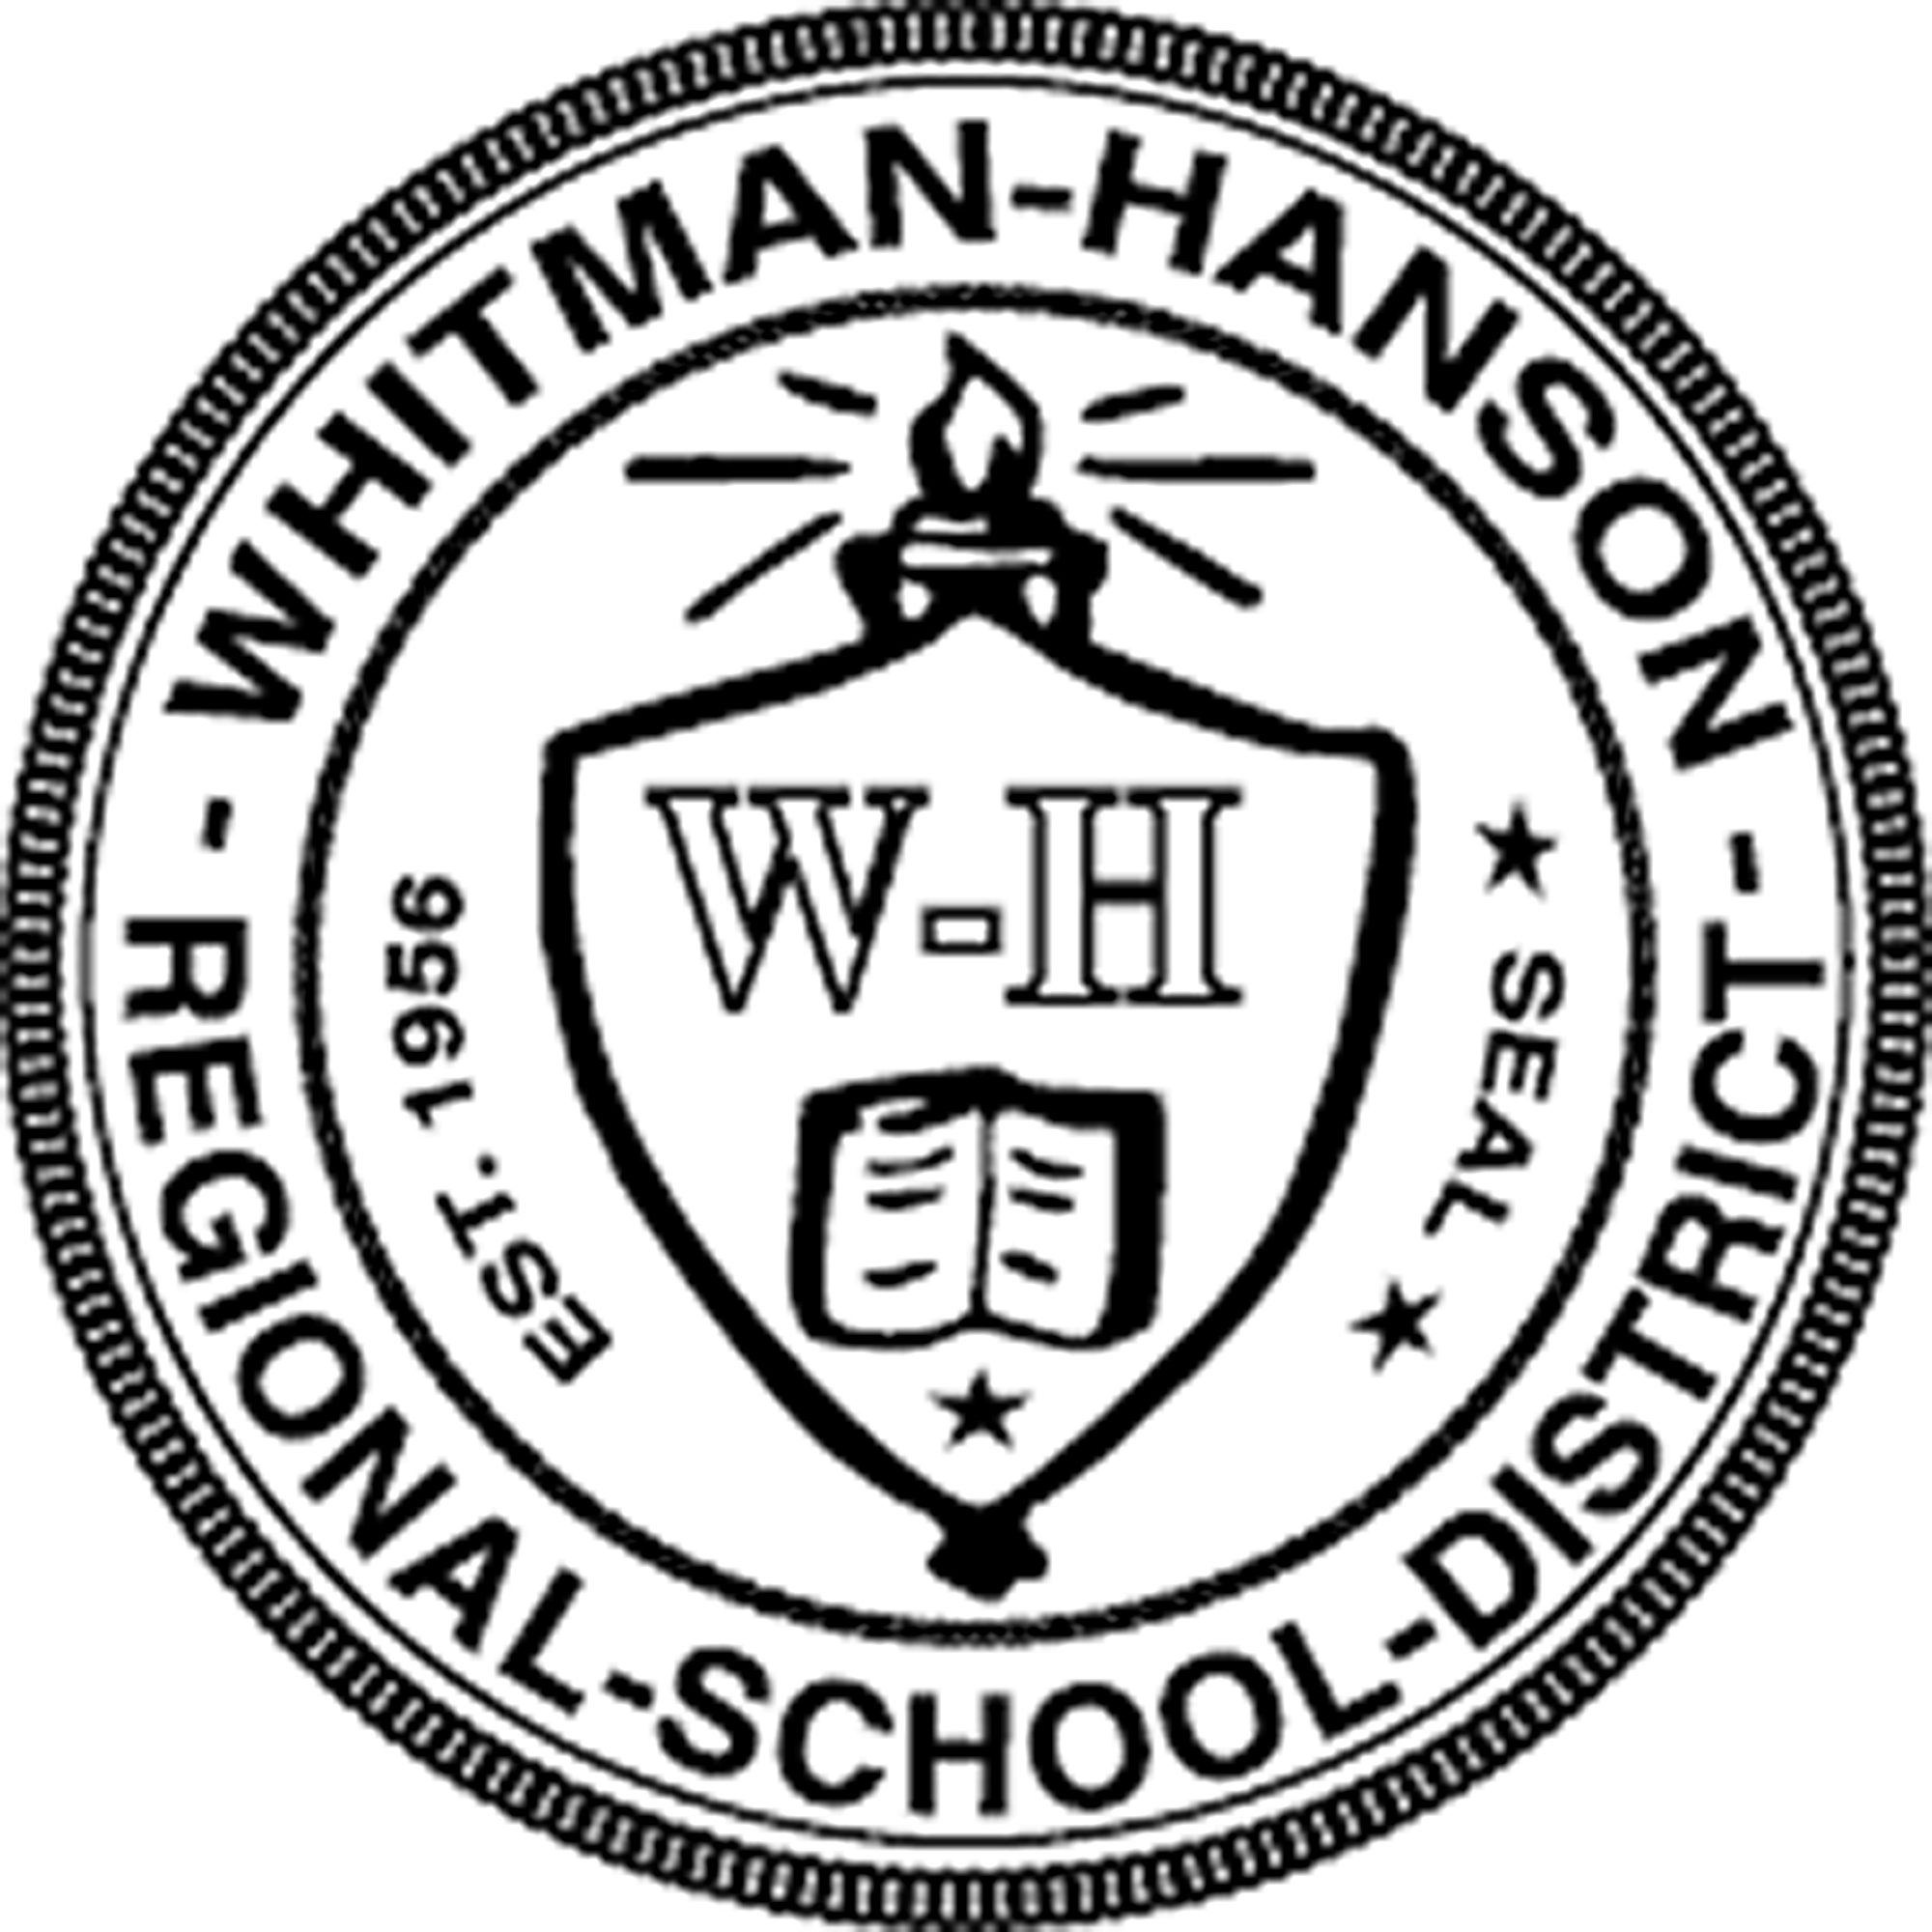 image of Whitman-Hanson Regional School District logo